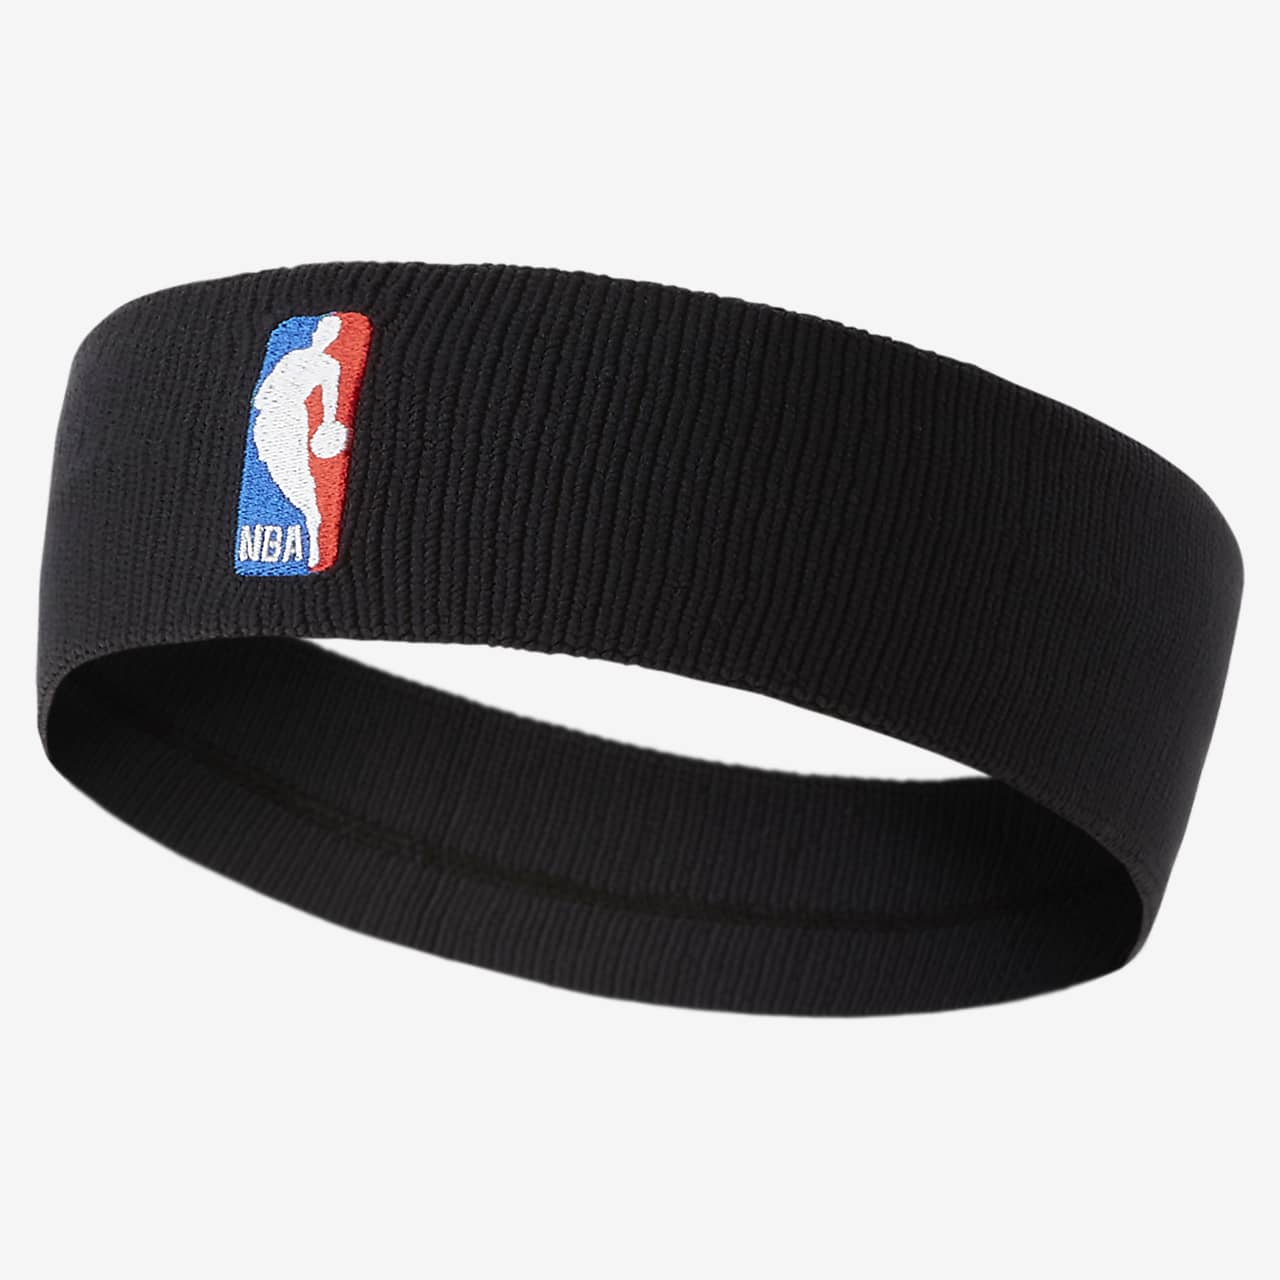 Pannband Nike NBA